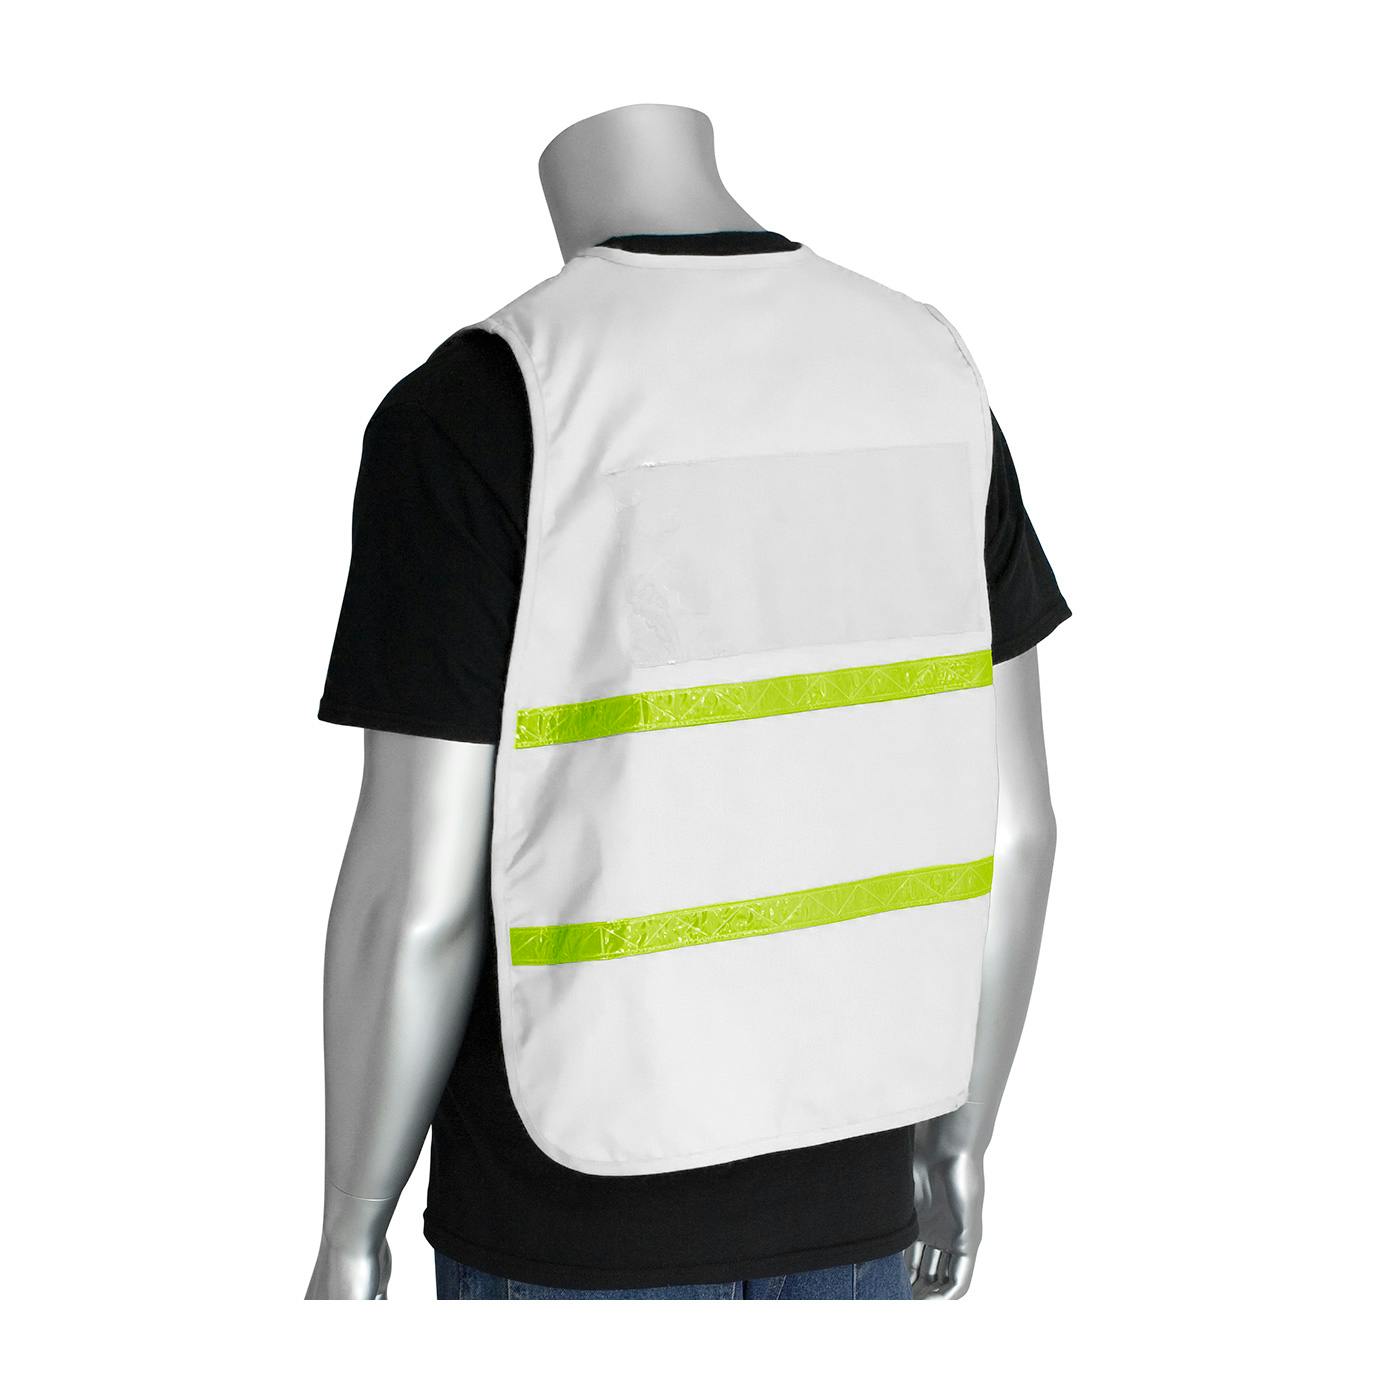 Non-ANSI Incident Command Vest - Cotton/Polyester Blend, White (300-2511)